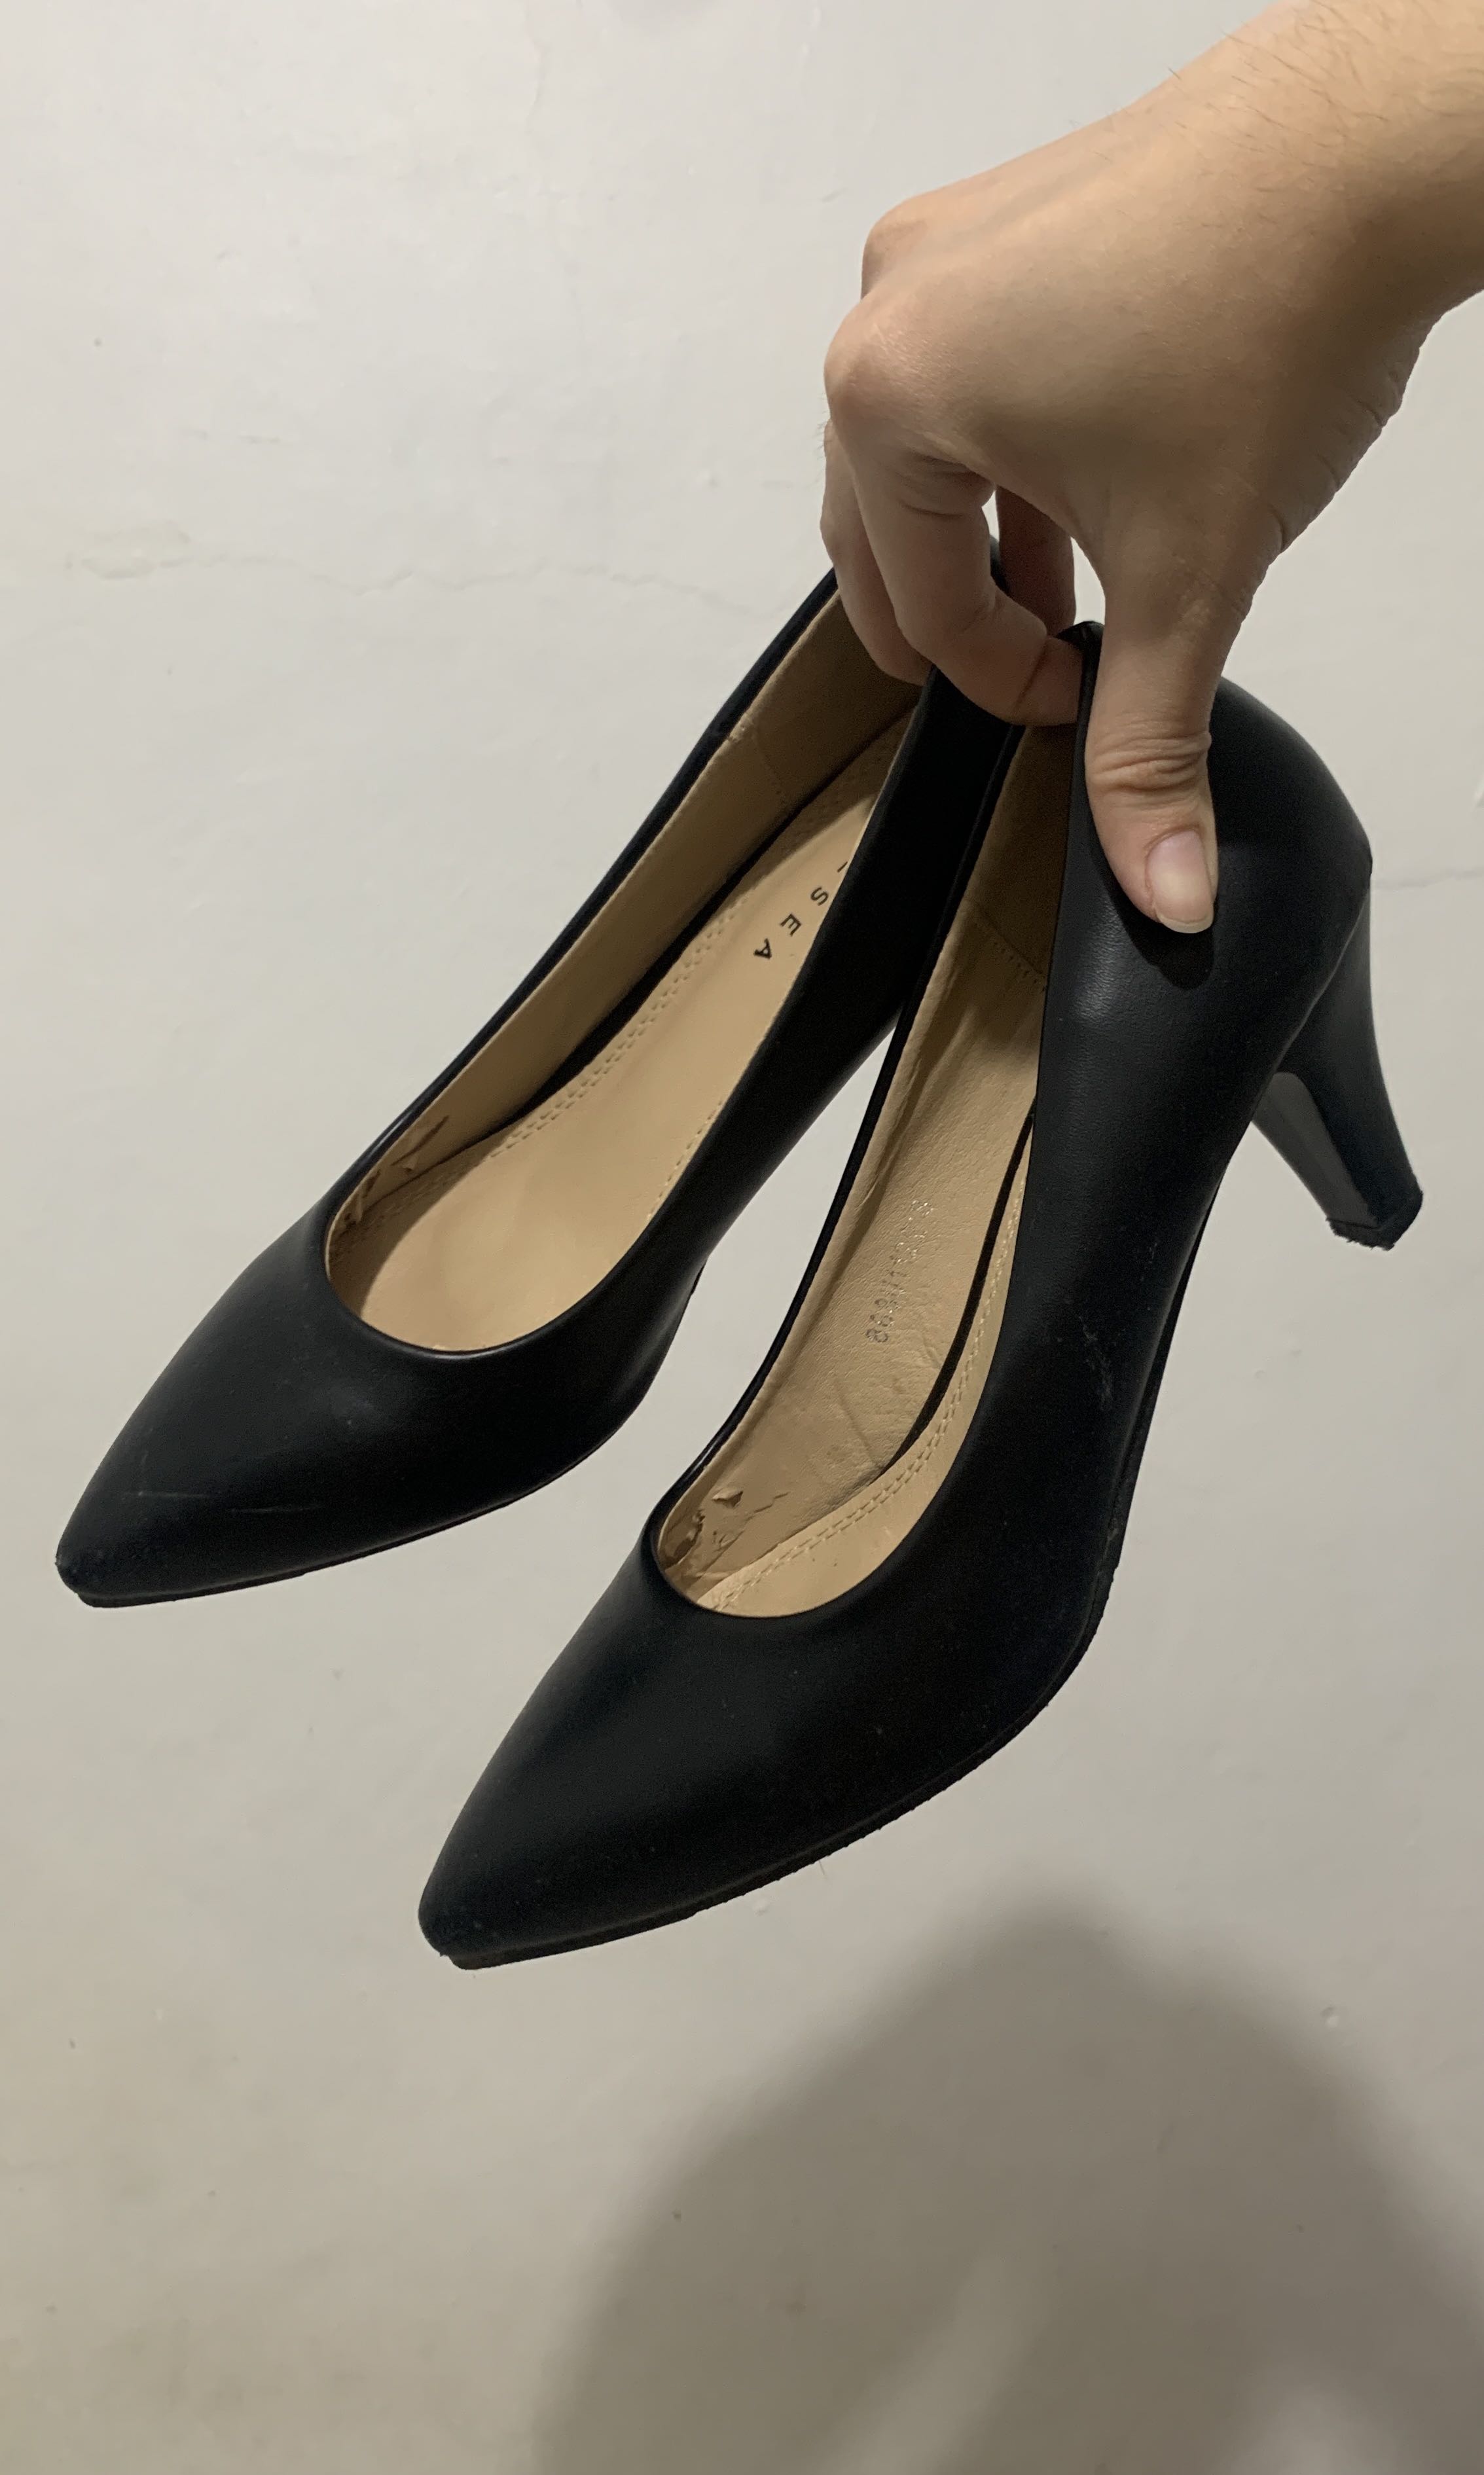 SALVATORE FERRAGAMO Shiny Black Heels Shoes Size 6 1/2 C | eBay-thanhphatduhoc.com.vn